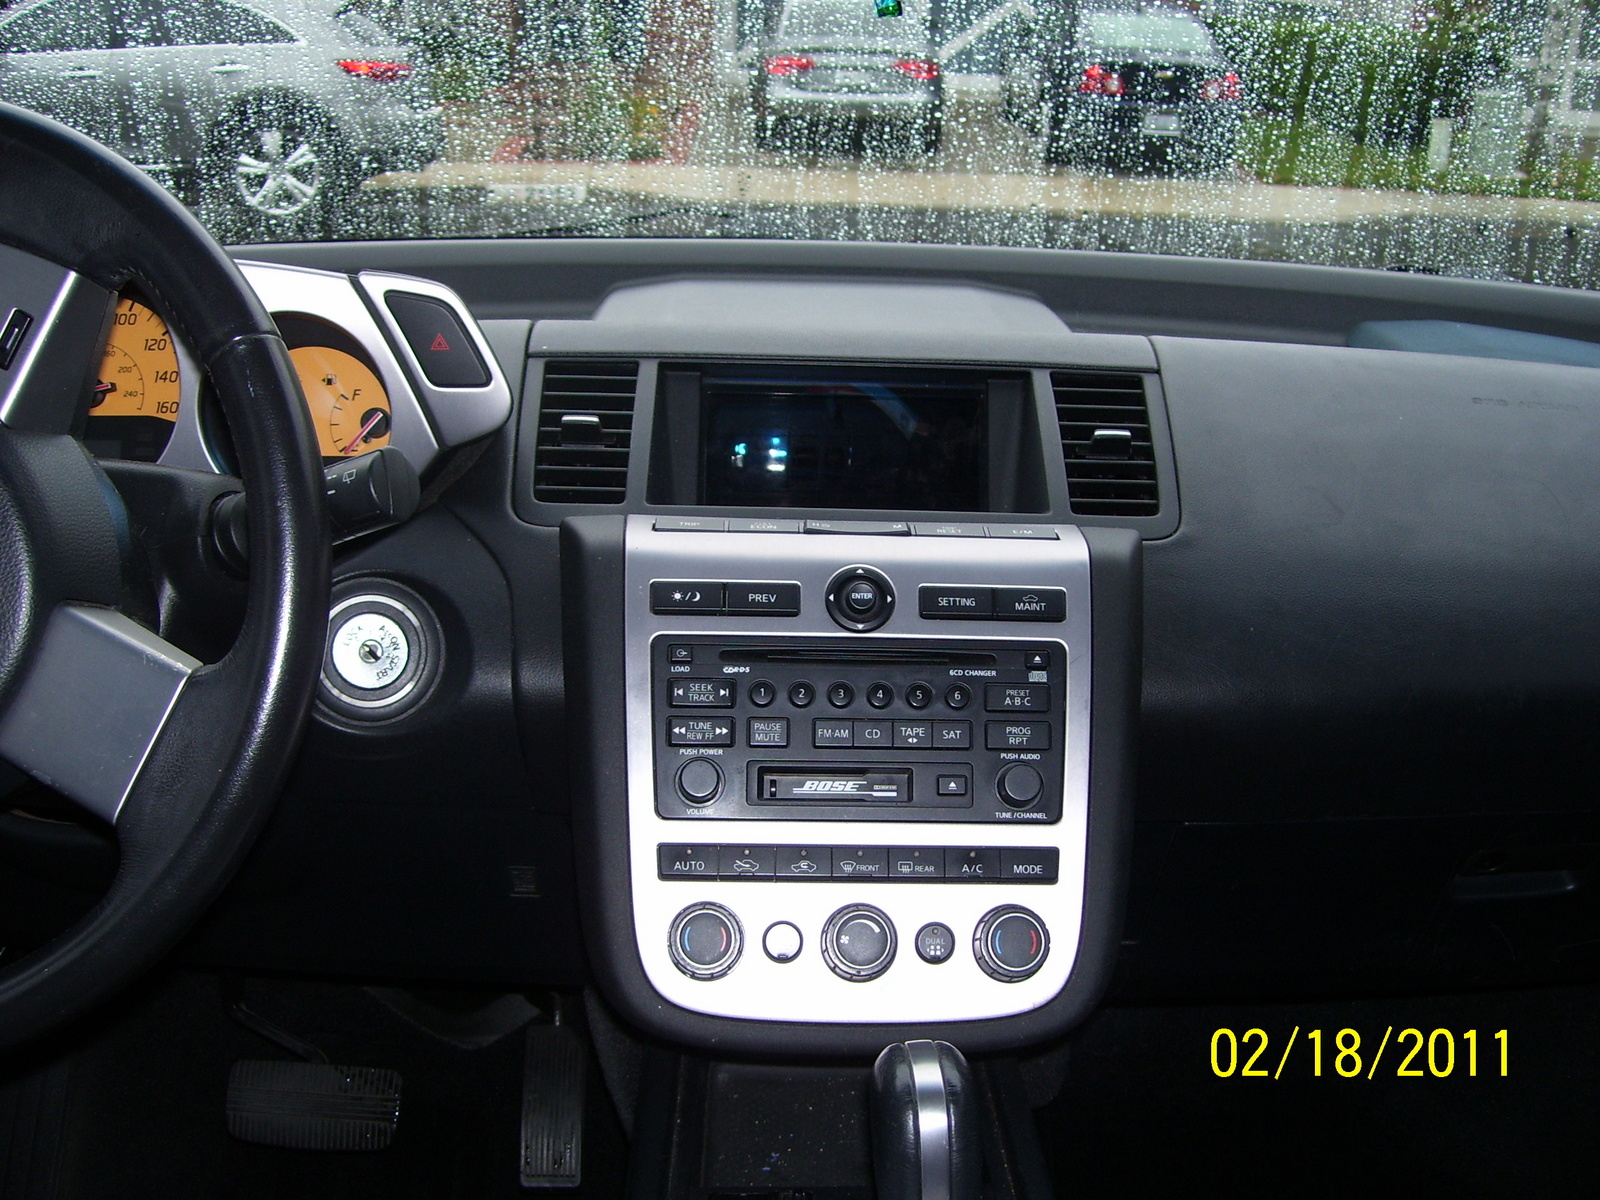 2003 Nissan murano interior #6